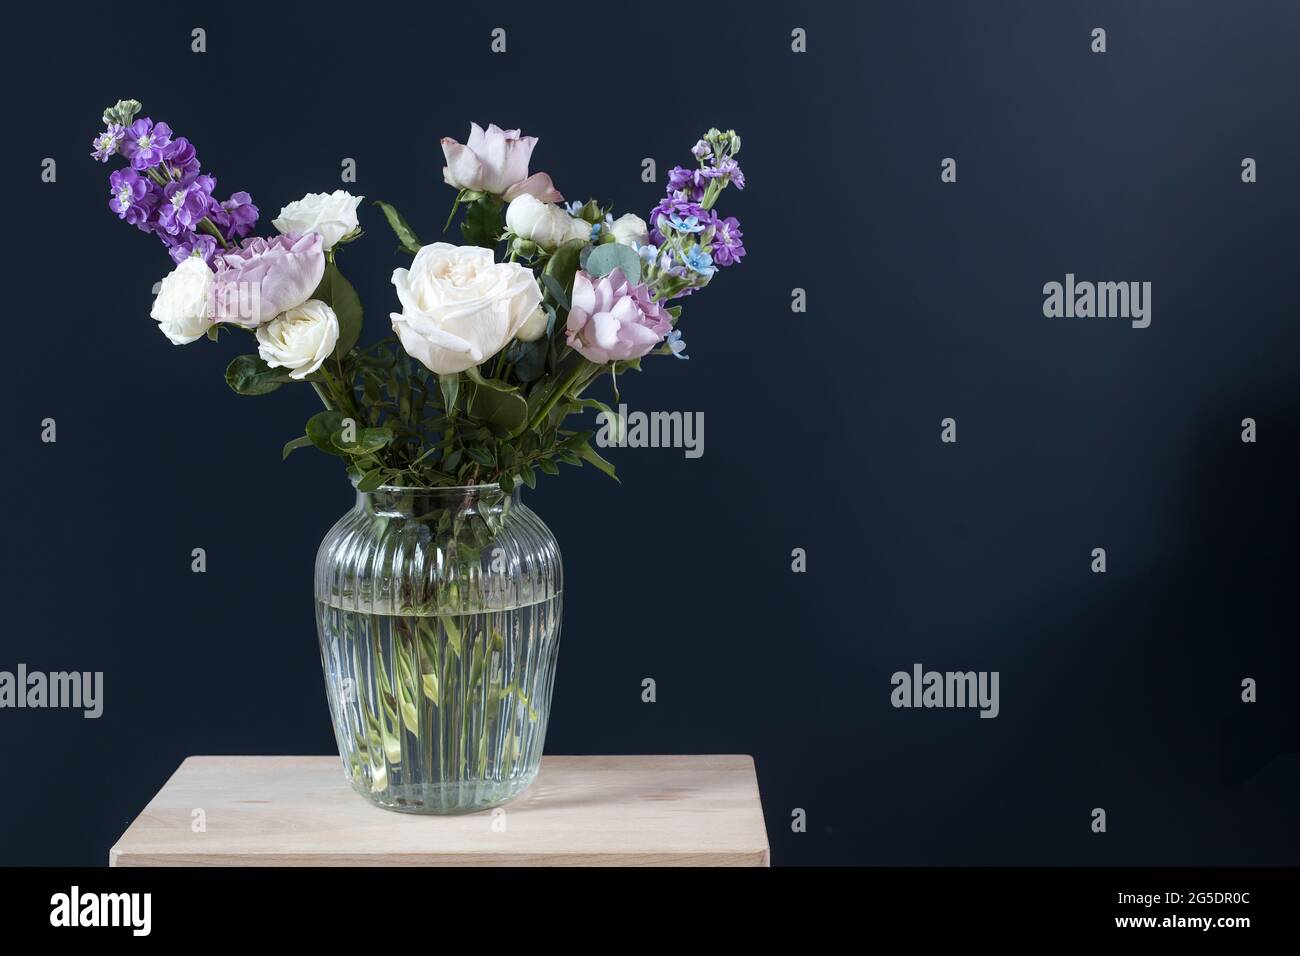 Bouquet of hackelia velutina, purple and white roses, small tea roses, matthiola incana and blue iris in glass vase opposite on black background. Stock Photo